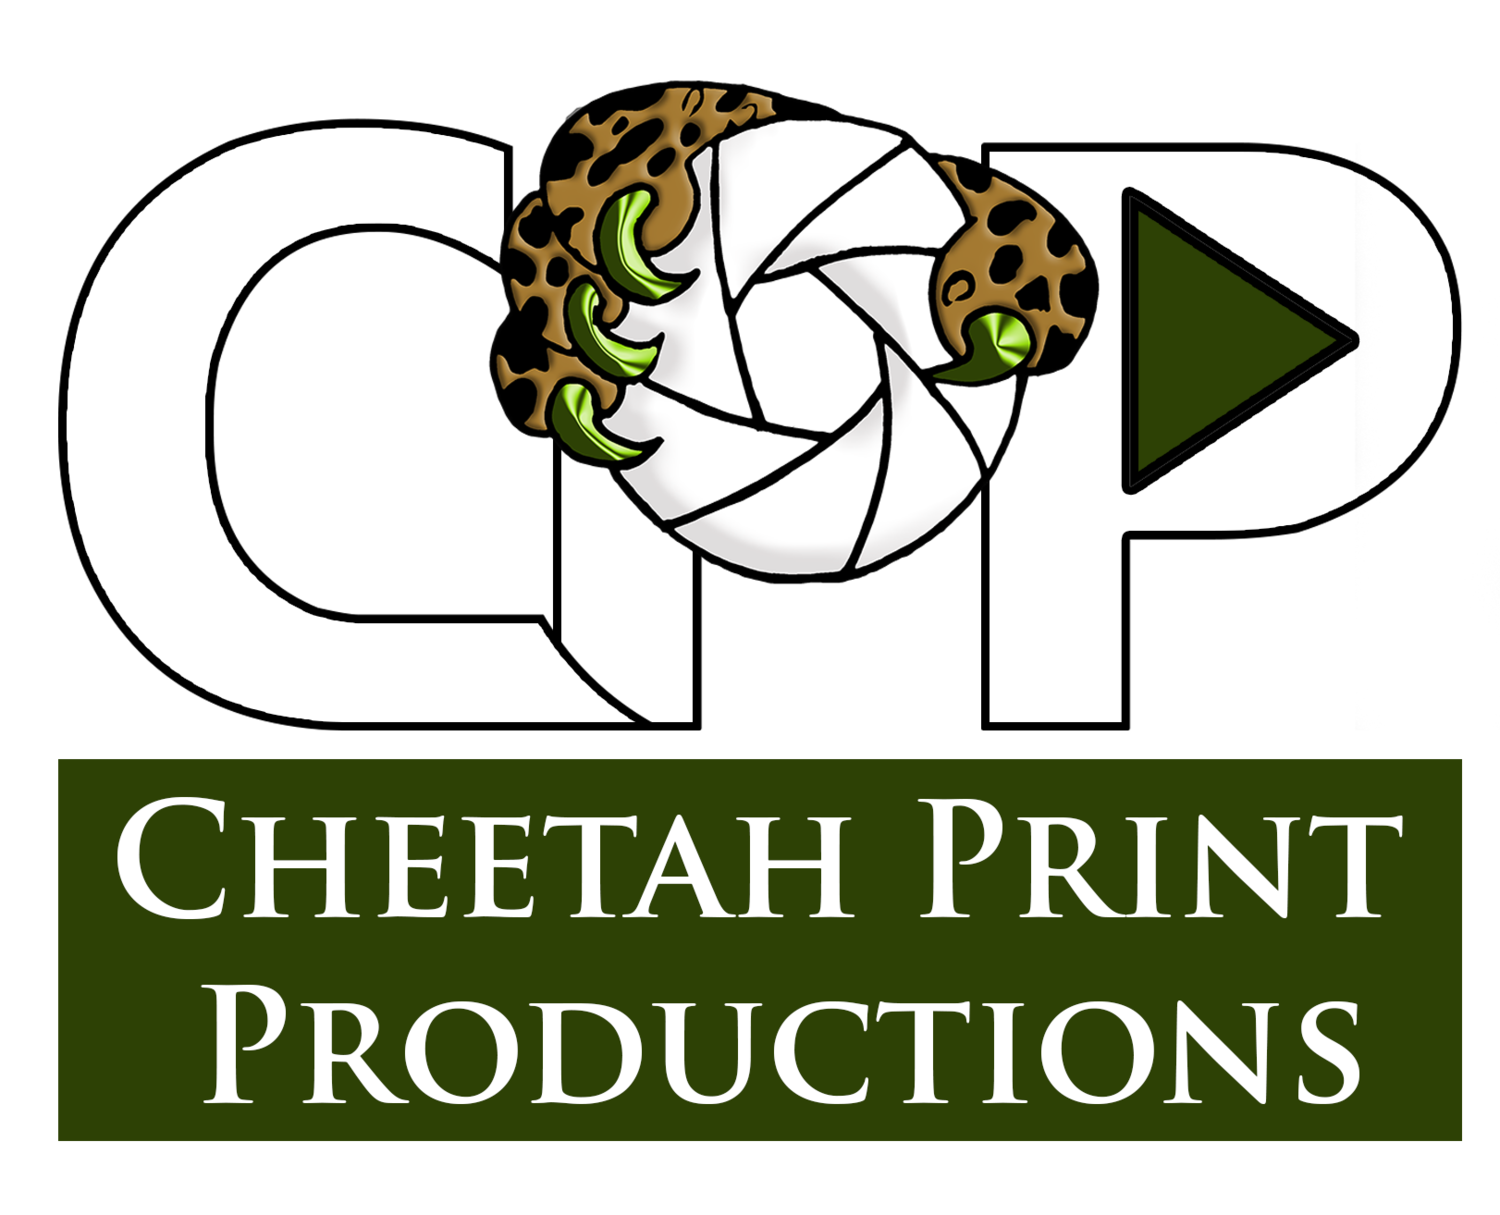 CHEETAH PRINT PRODUCTIONS